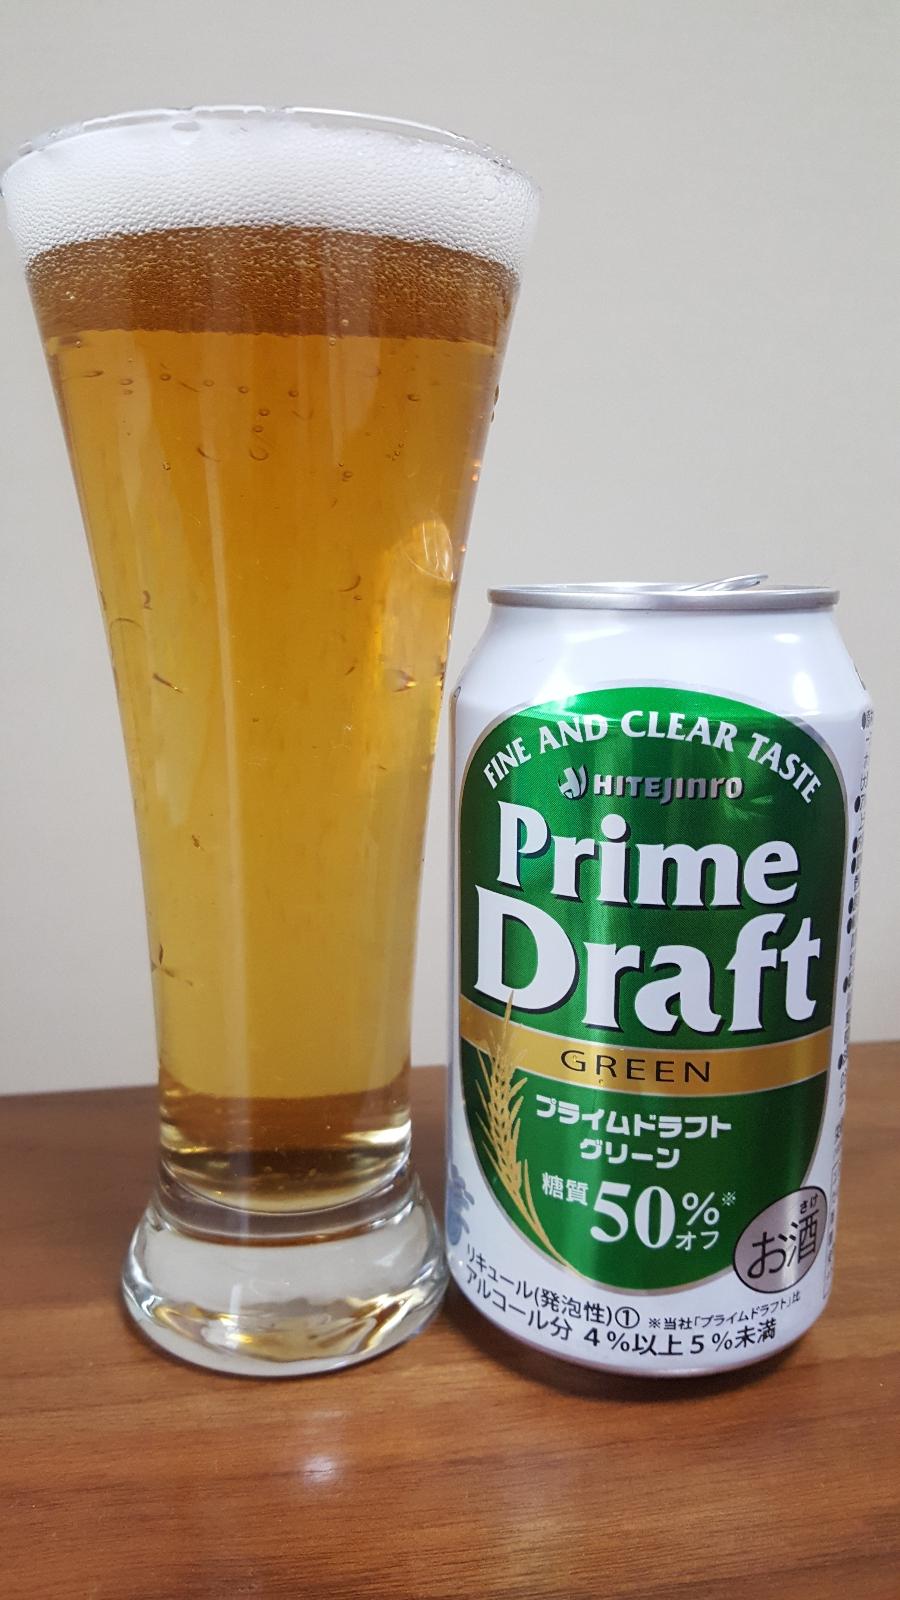 Prime Draft - Green